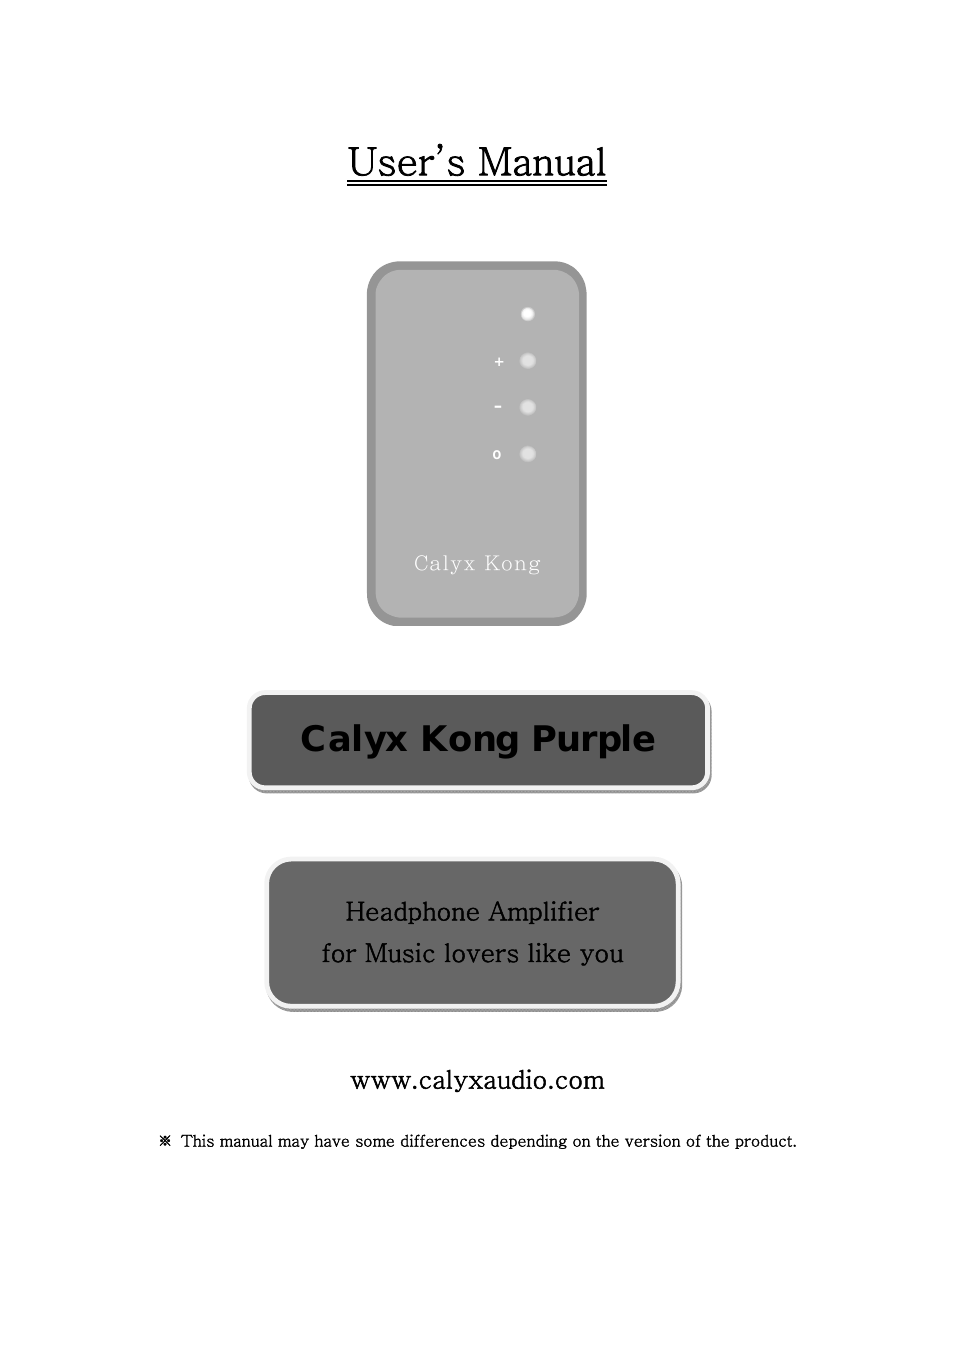 Kong Purple - USB Headphone Amplifier